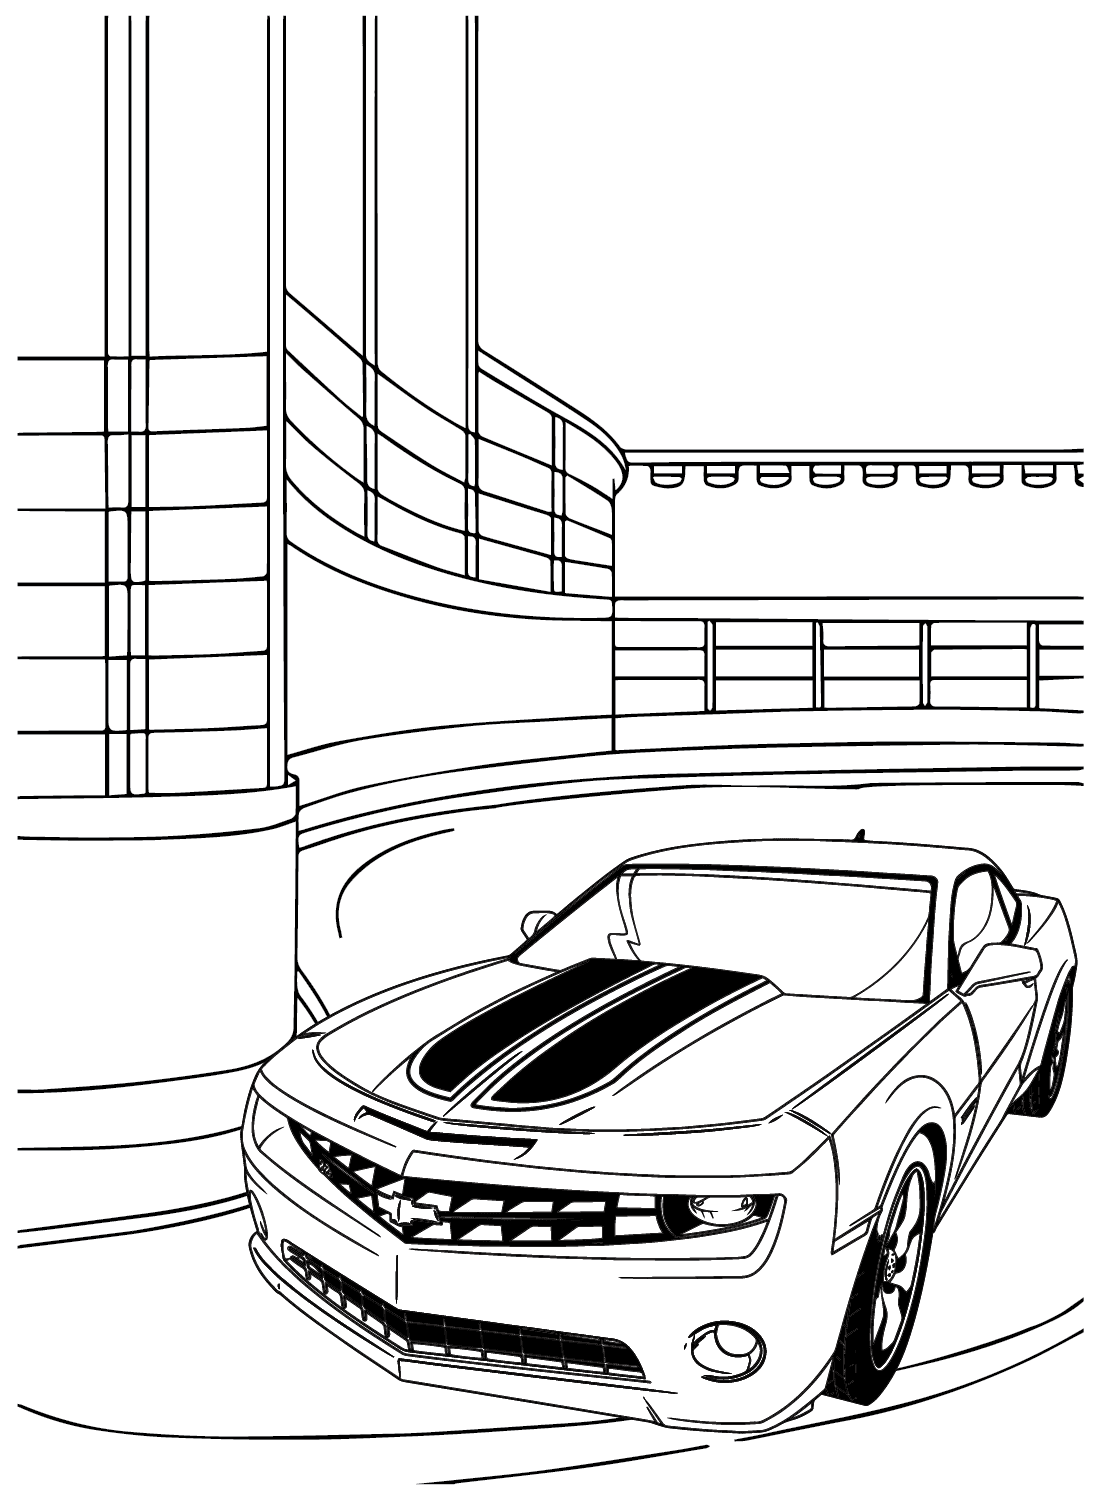 Раскраска автомобиля Шевроле от Chevrolet